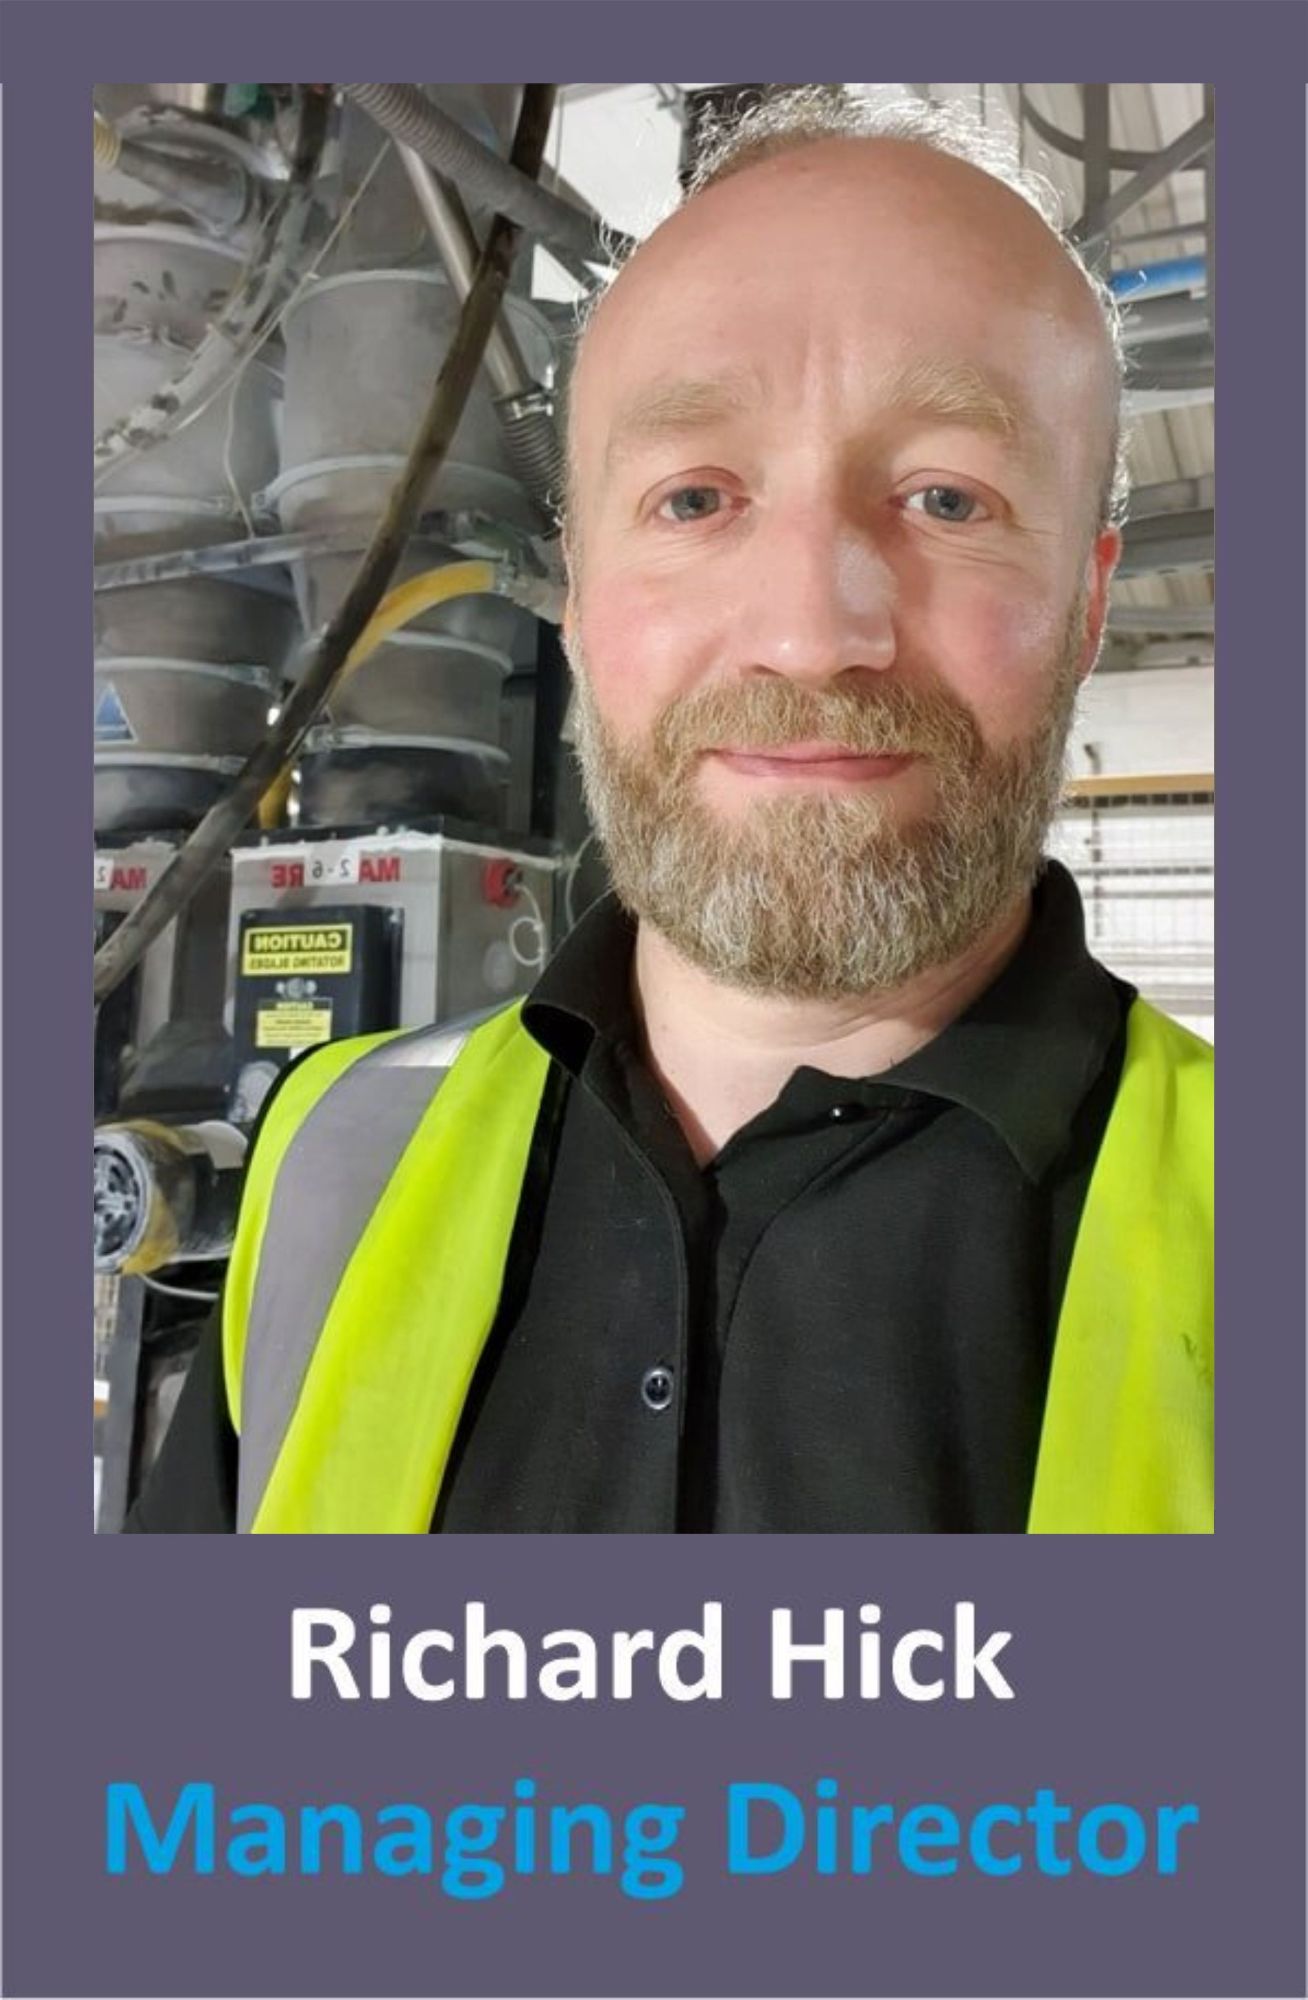 Richard Hick